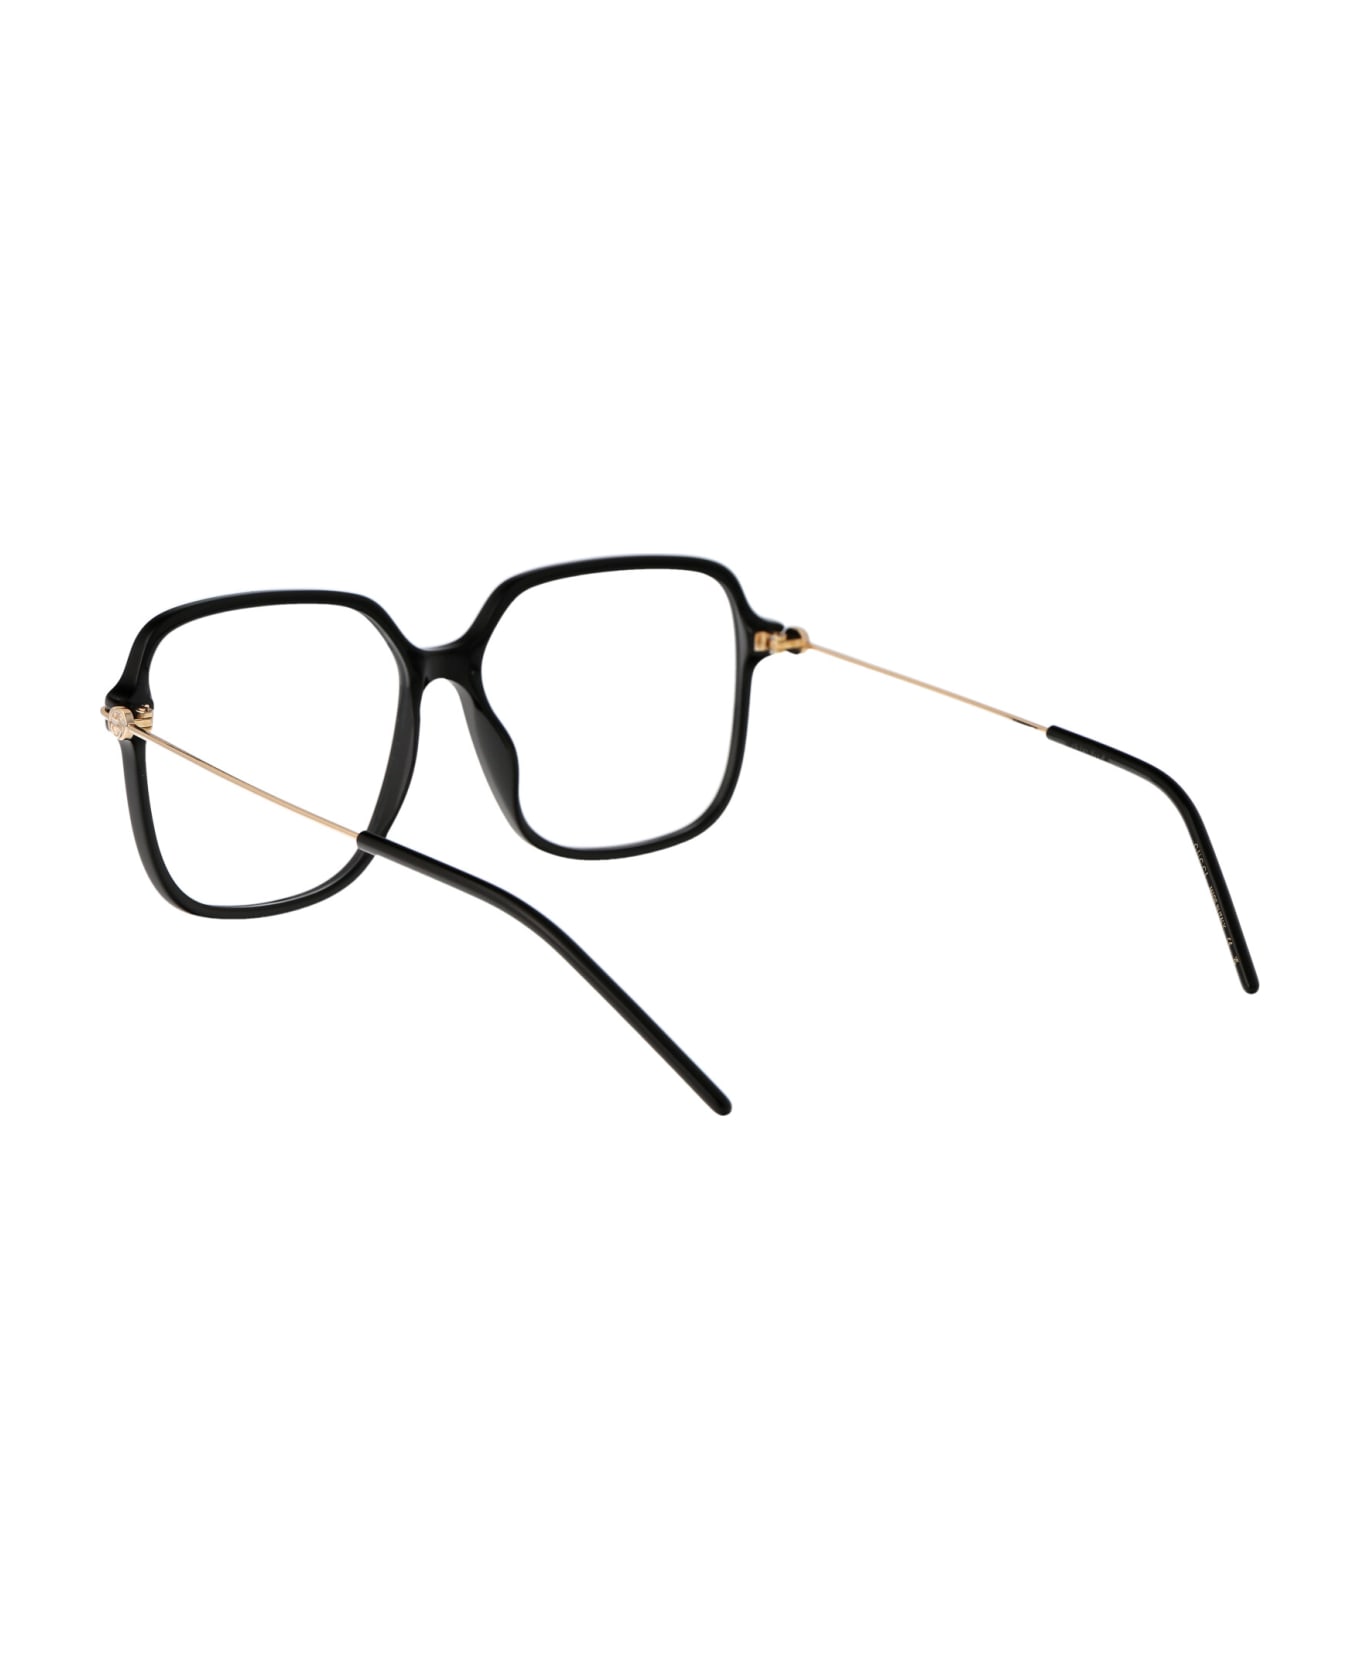 Gucci Eyewear Gg1271o Glasses - 001 BLACK GOLD TRANSPARENT